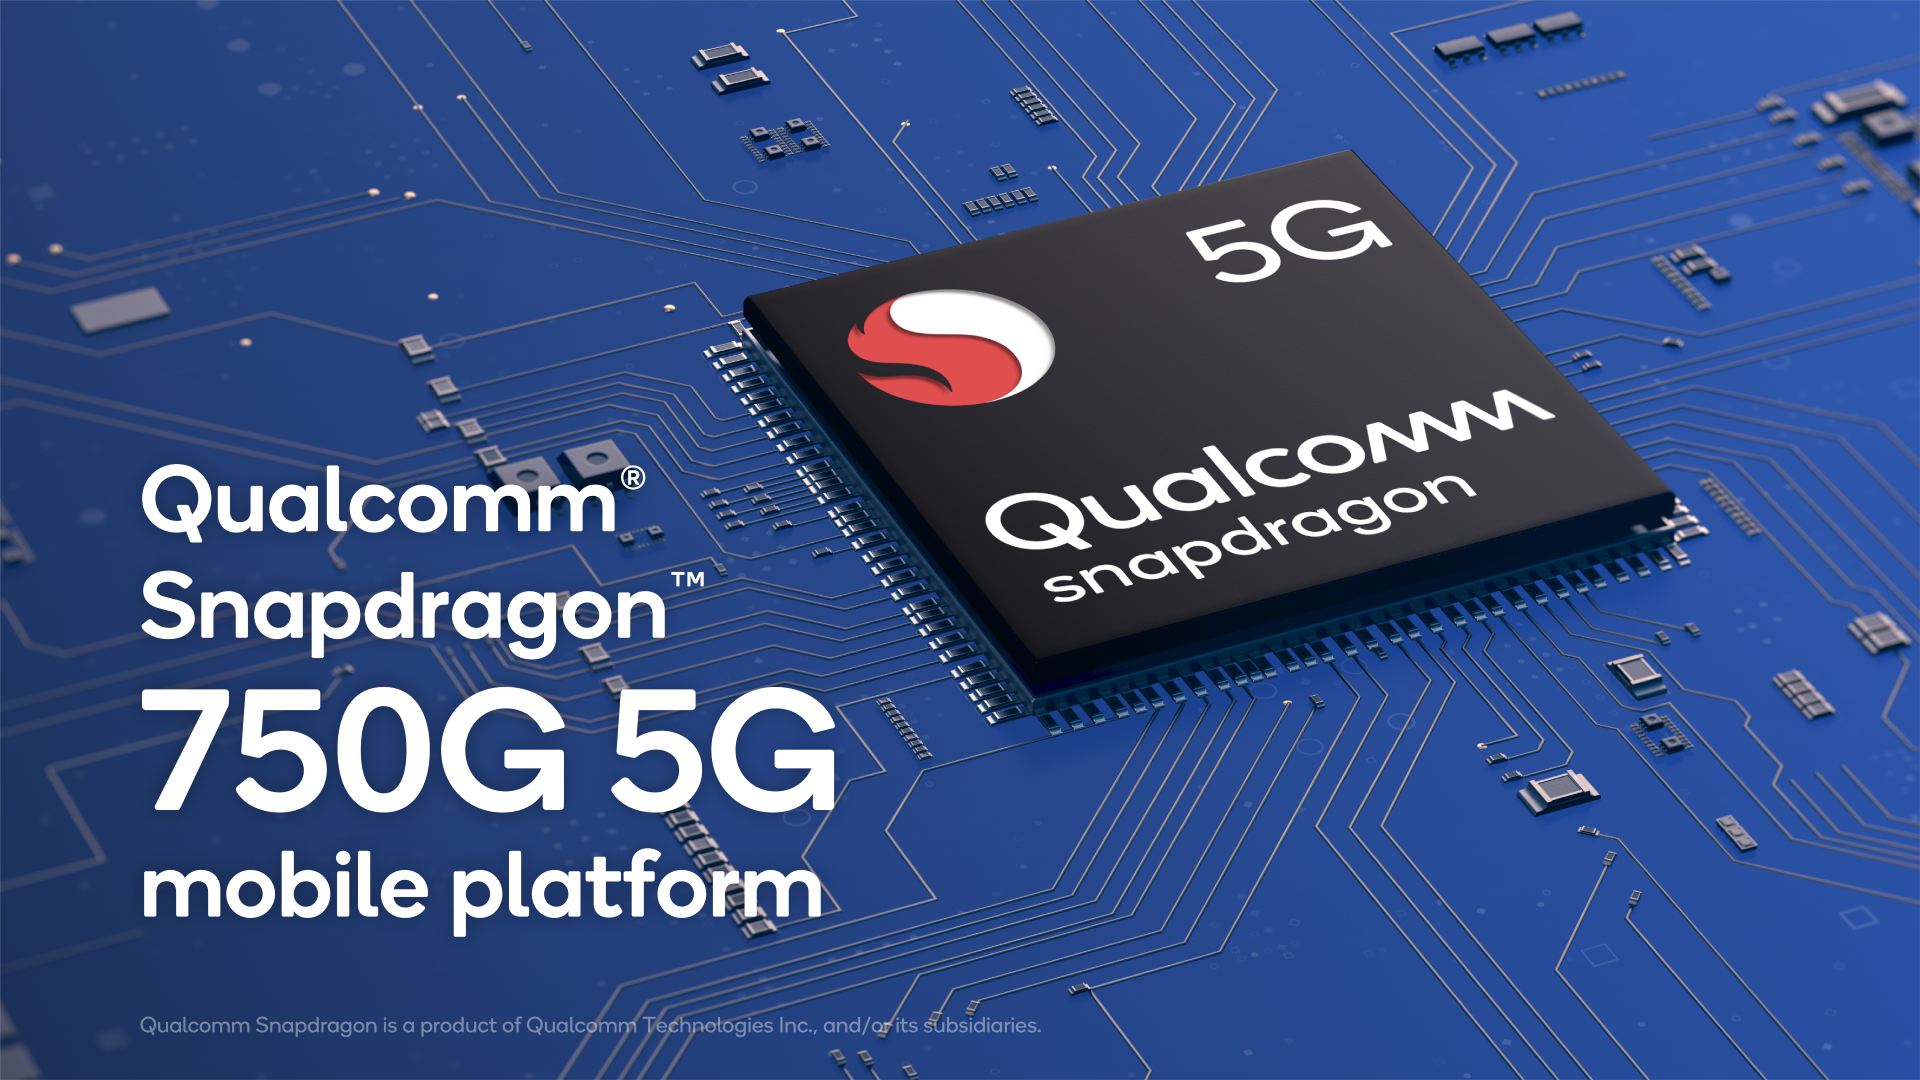 Qualcomm Snapdragon 750G 5G